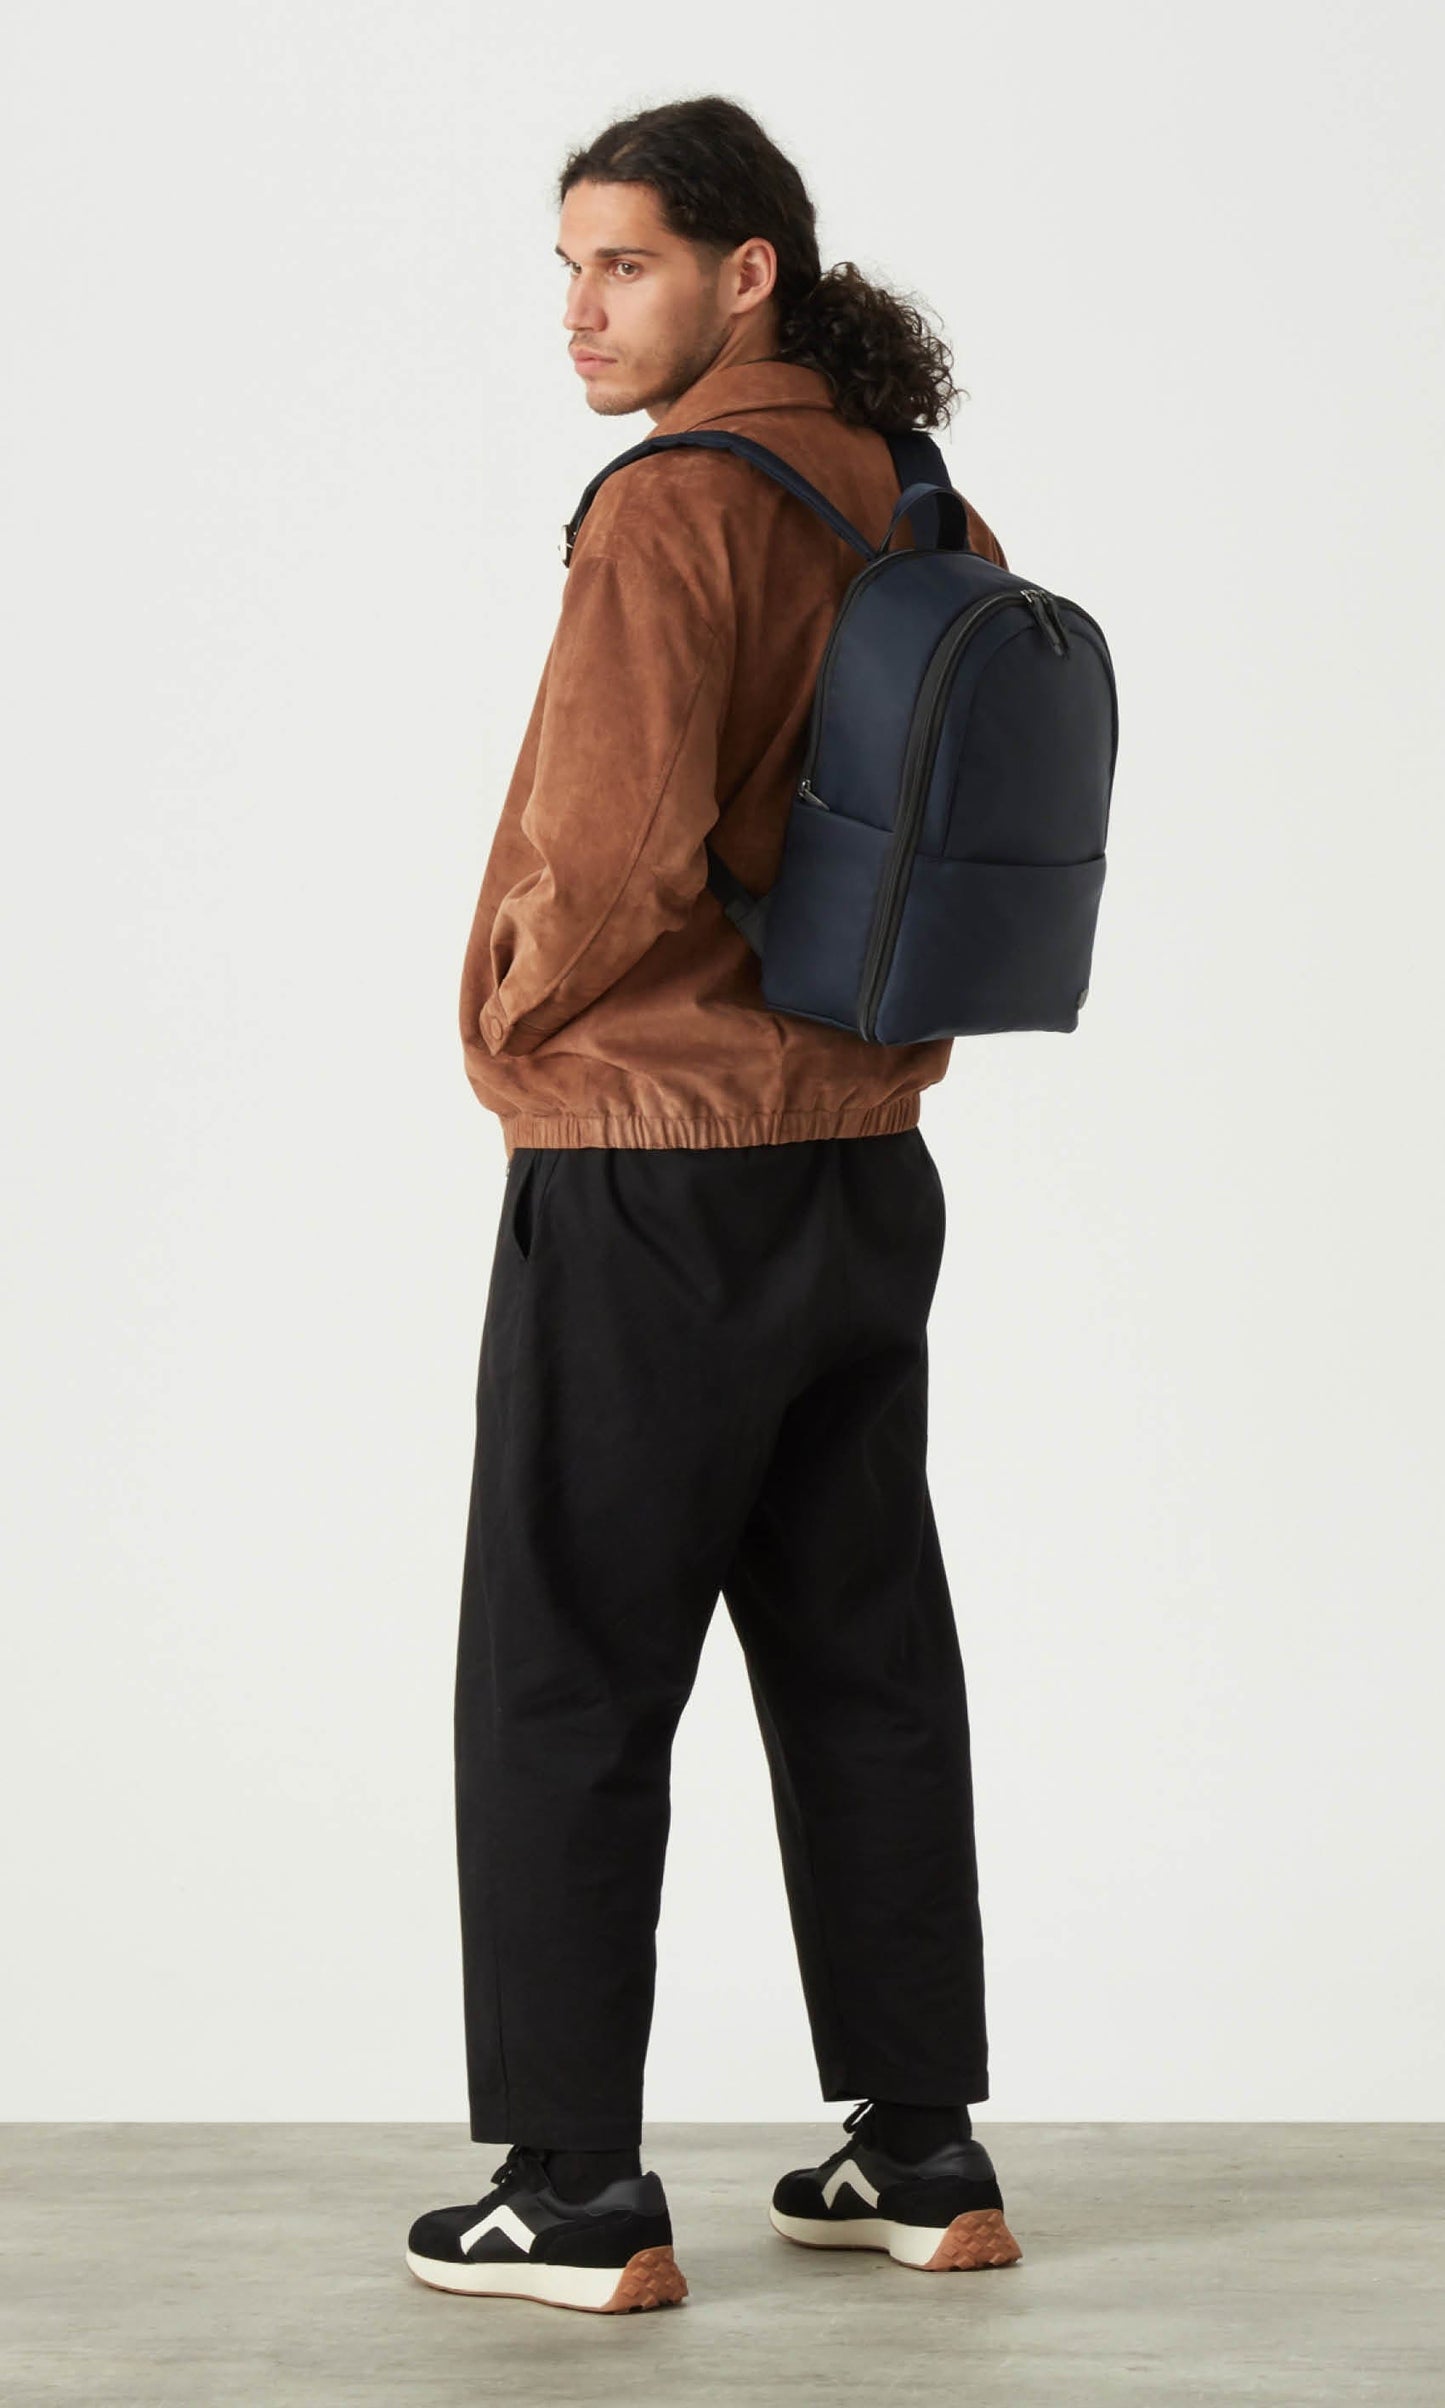 Antler Luggage -  Chelsea backpack in blush - Backpacks Chelsea Backpack Blush (Pink) | Travel & Lifestyle Bags | Antler UK